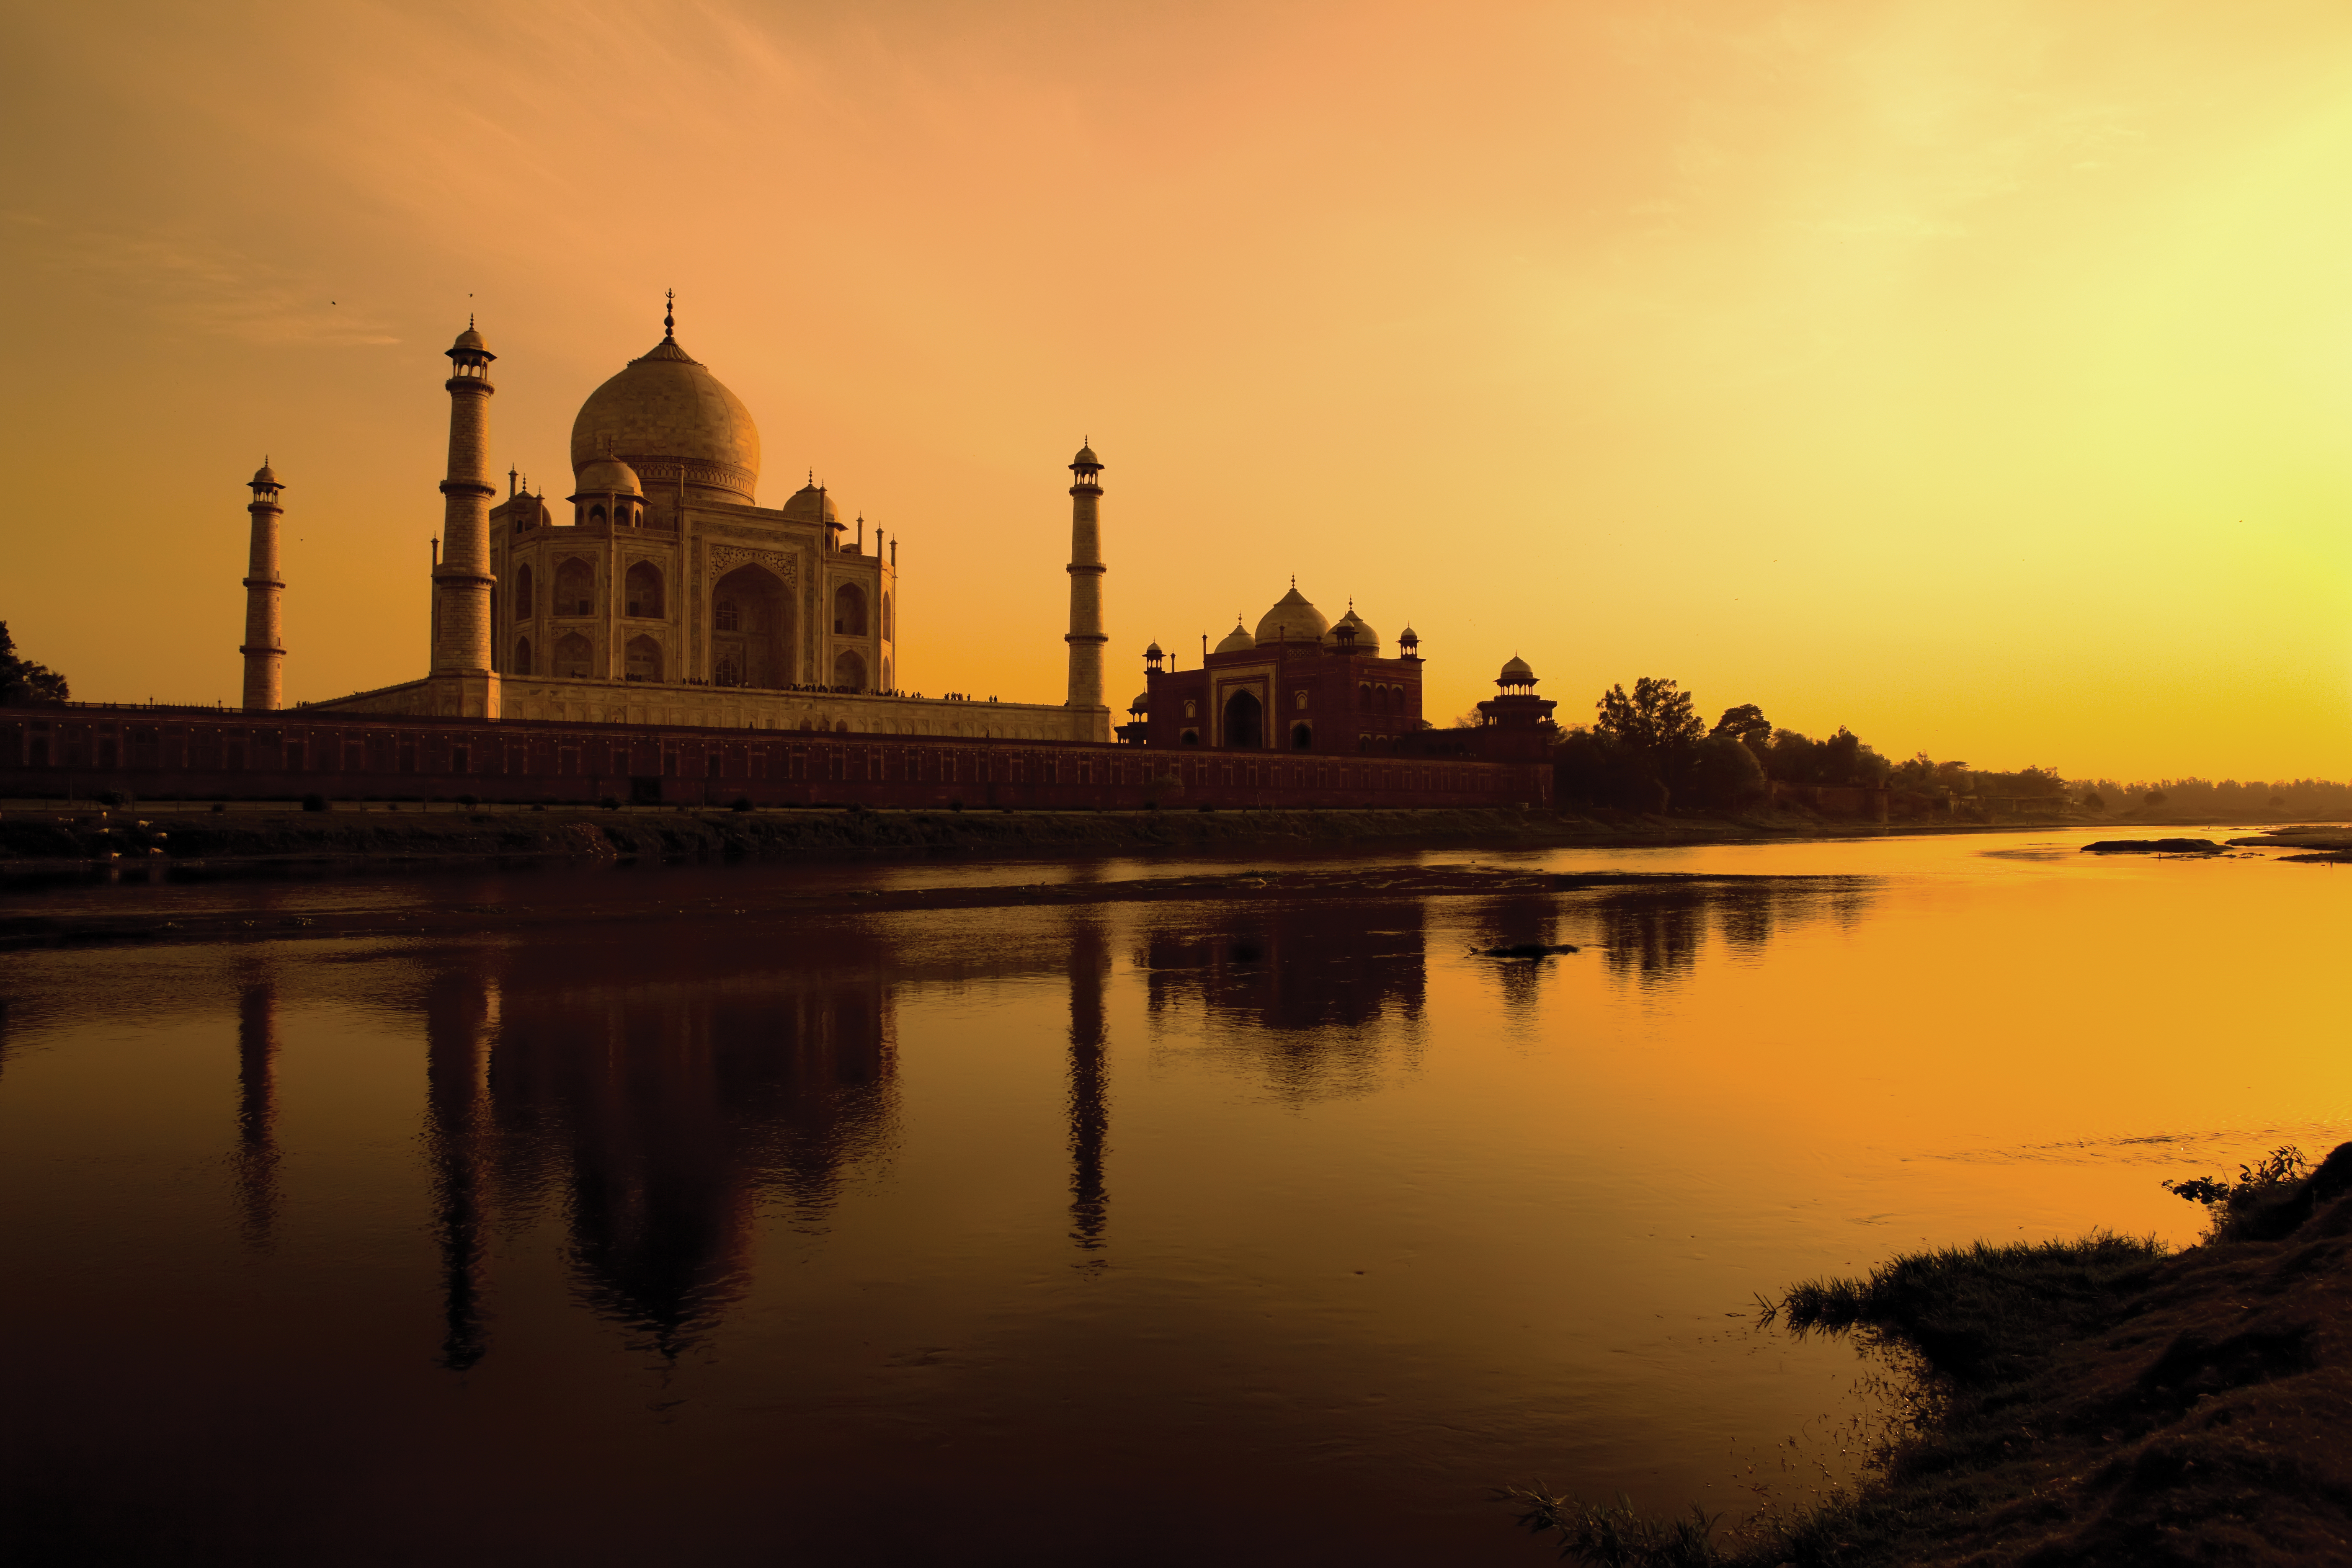 The Taj Mahal is India’s biggest tourist attraction